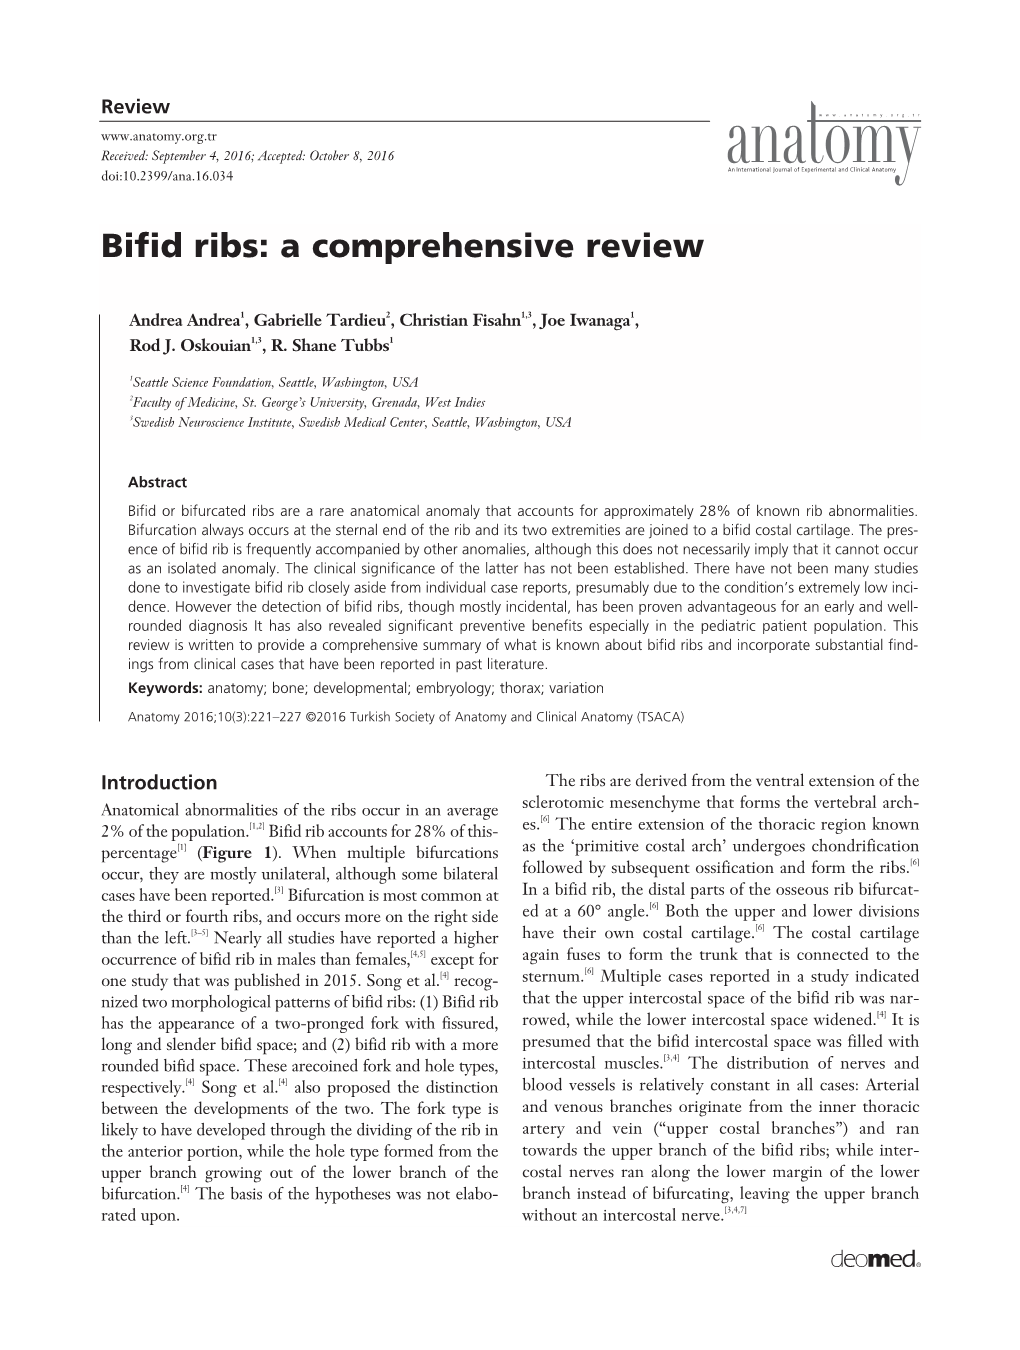 Bifid Ribs: a Comprehensive Review